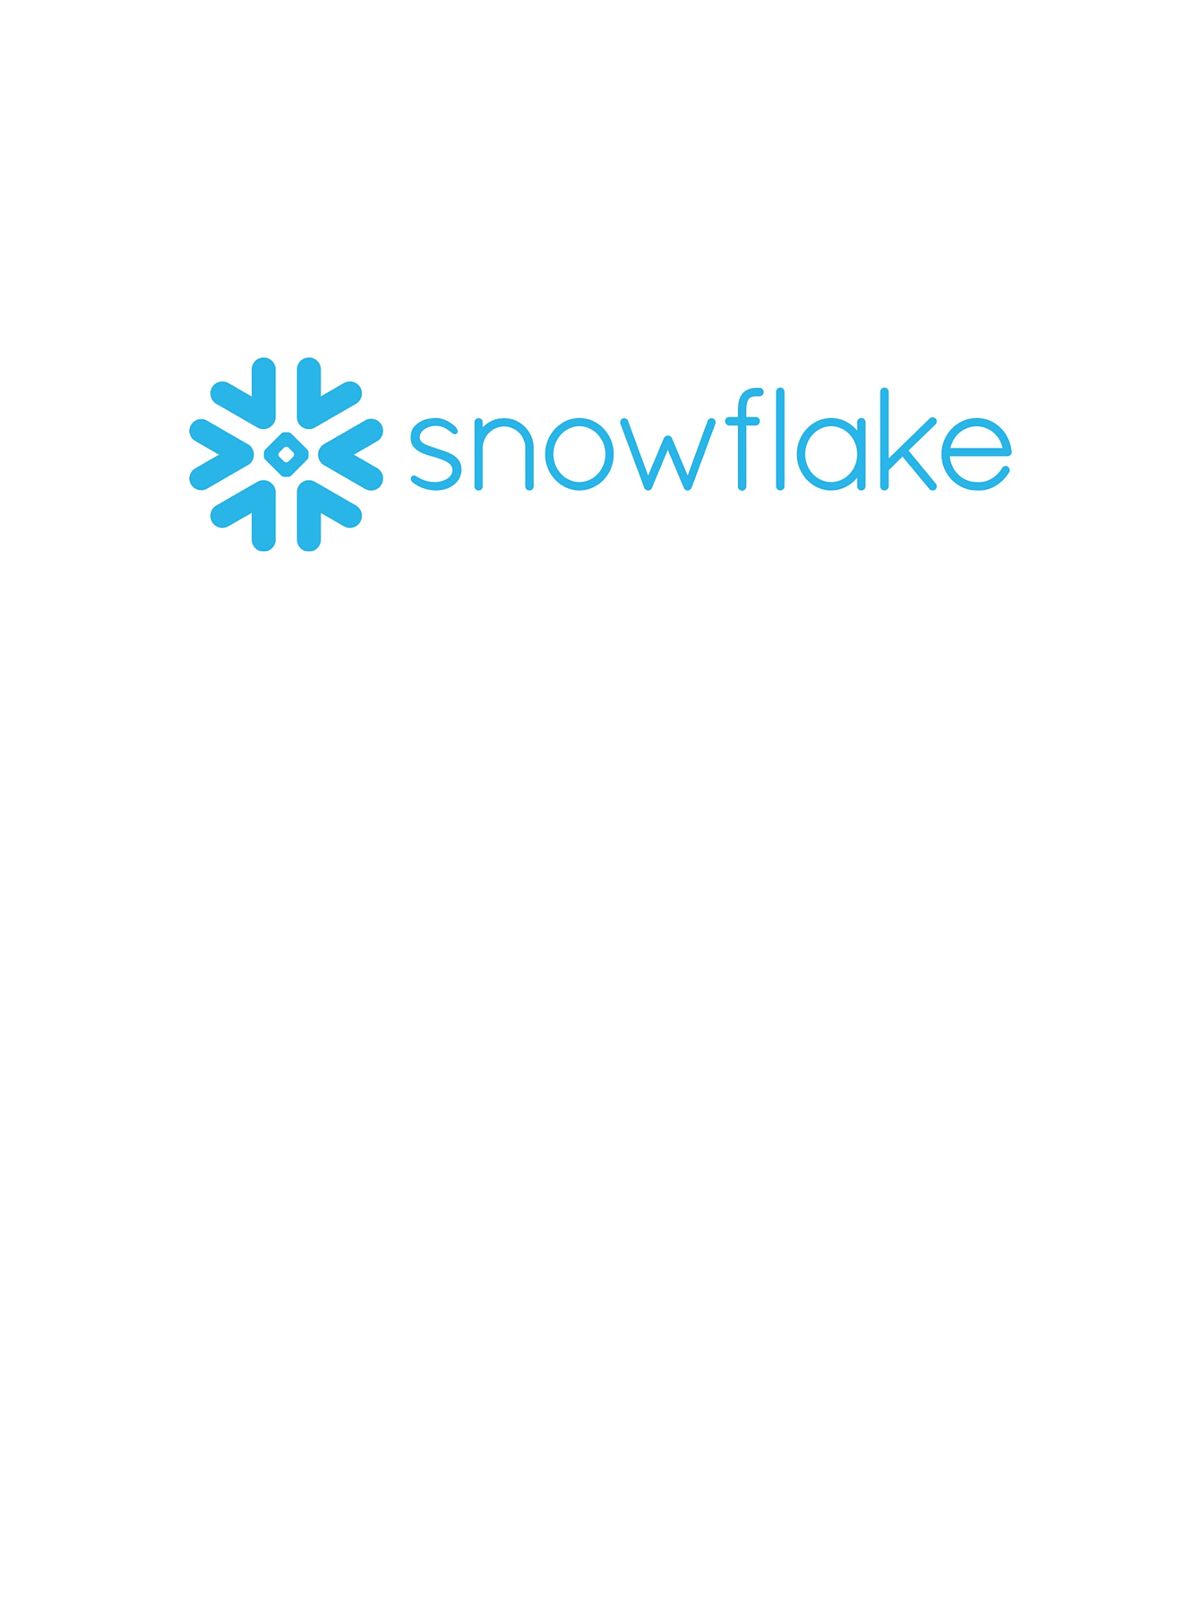 4 Weeks Snowflake cloud data platform Training Course Berkeley